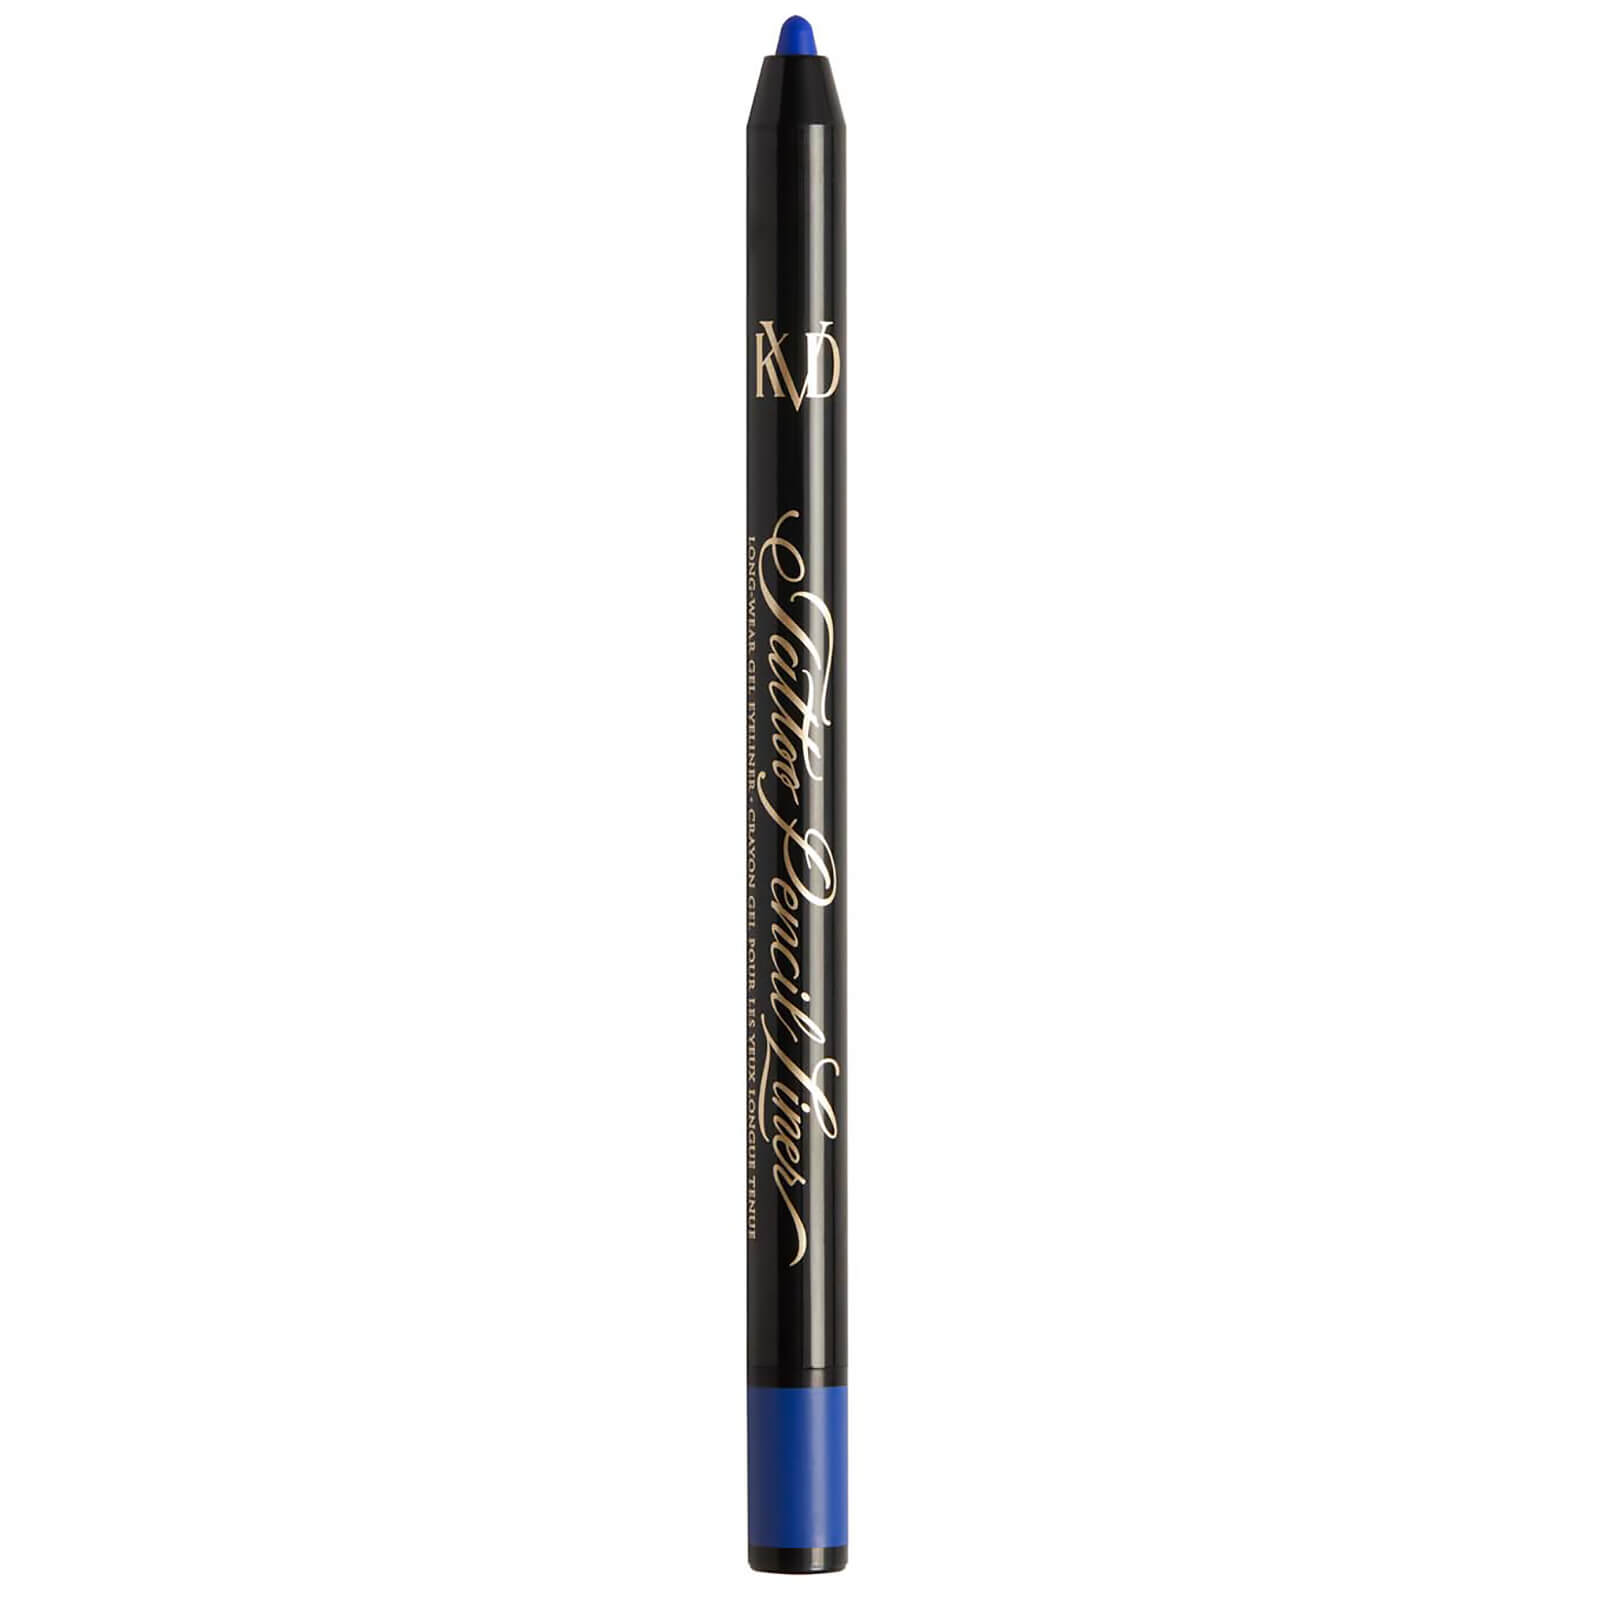 KVD Beauty Tattoo Pencil Liner Long-Wear Gel Eyeliner 0.5g (Various Shades) - Azurite Blue 100